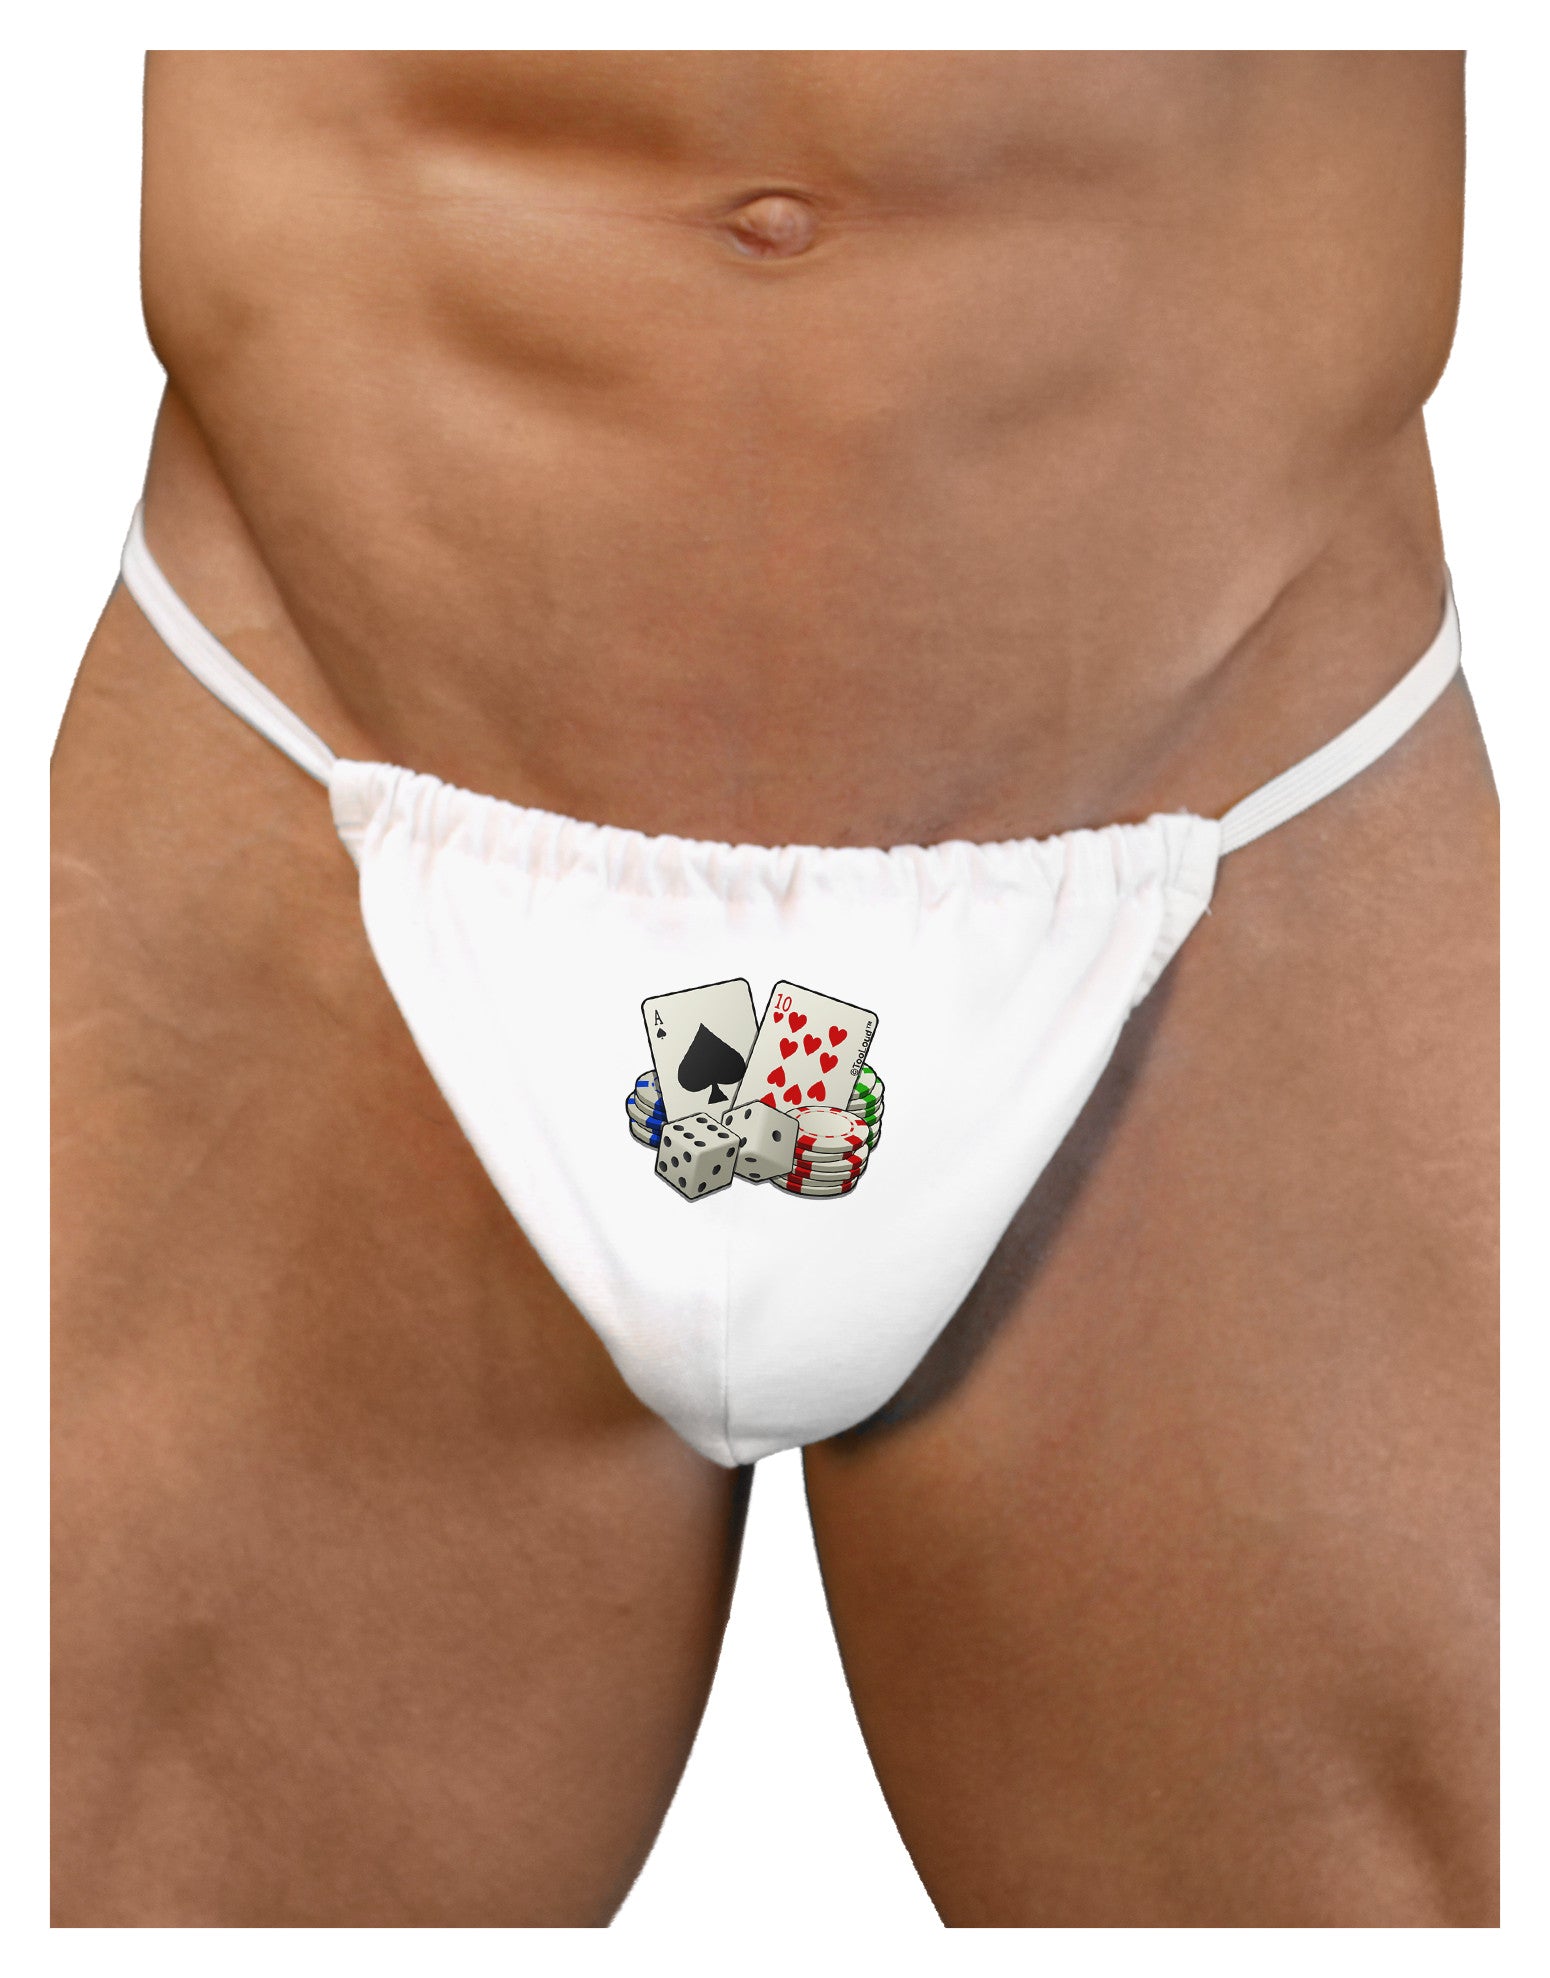 Shop NDS Wear Premium Men's Thongs - Comfortable & Stylish